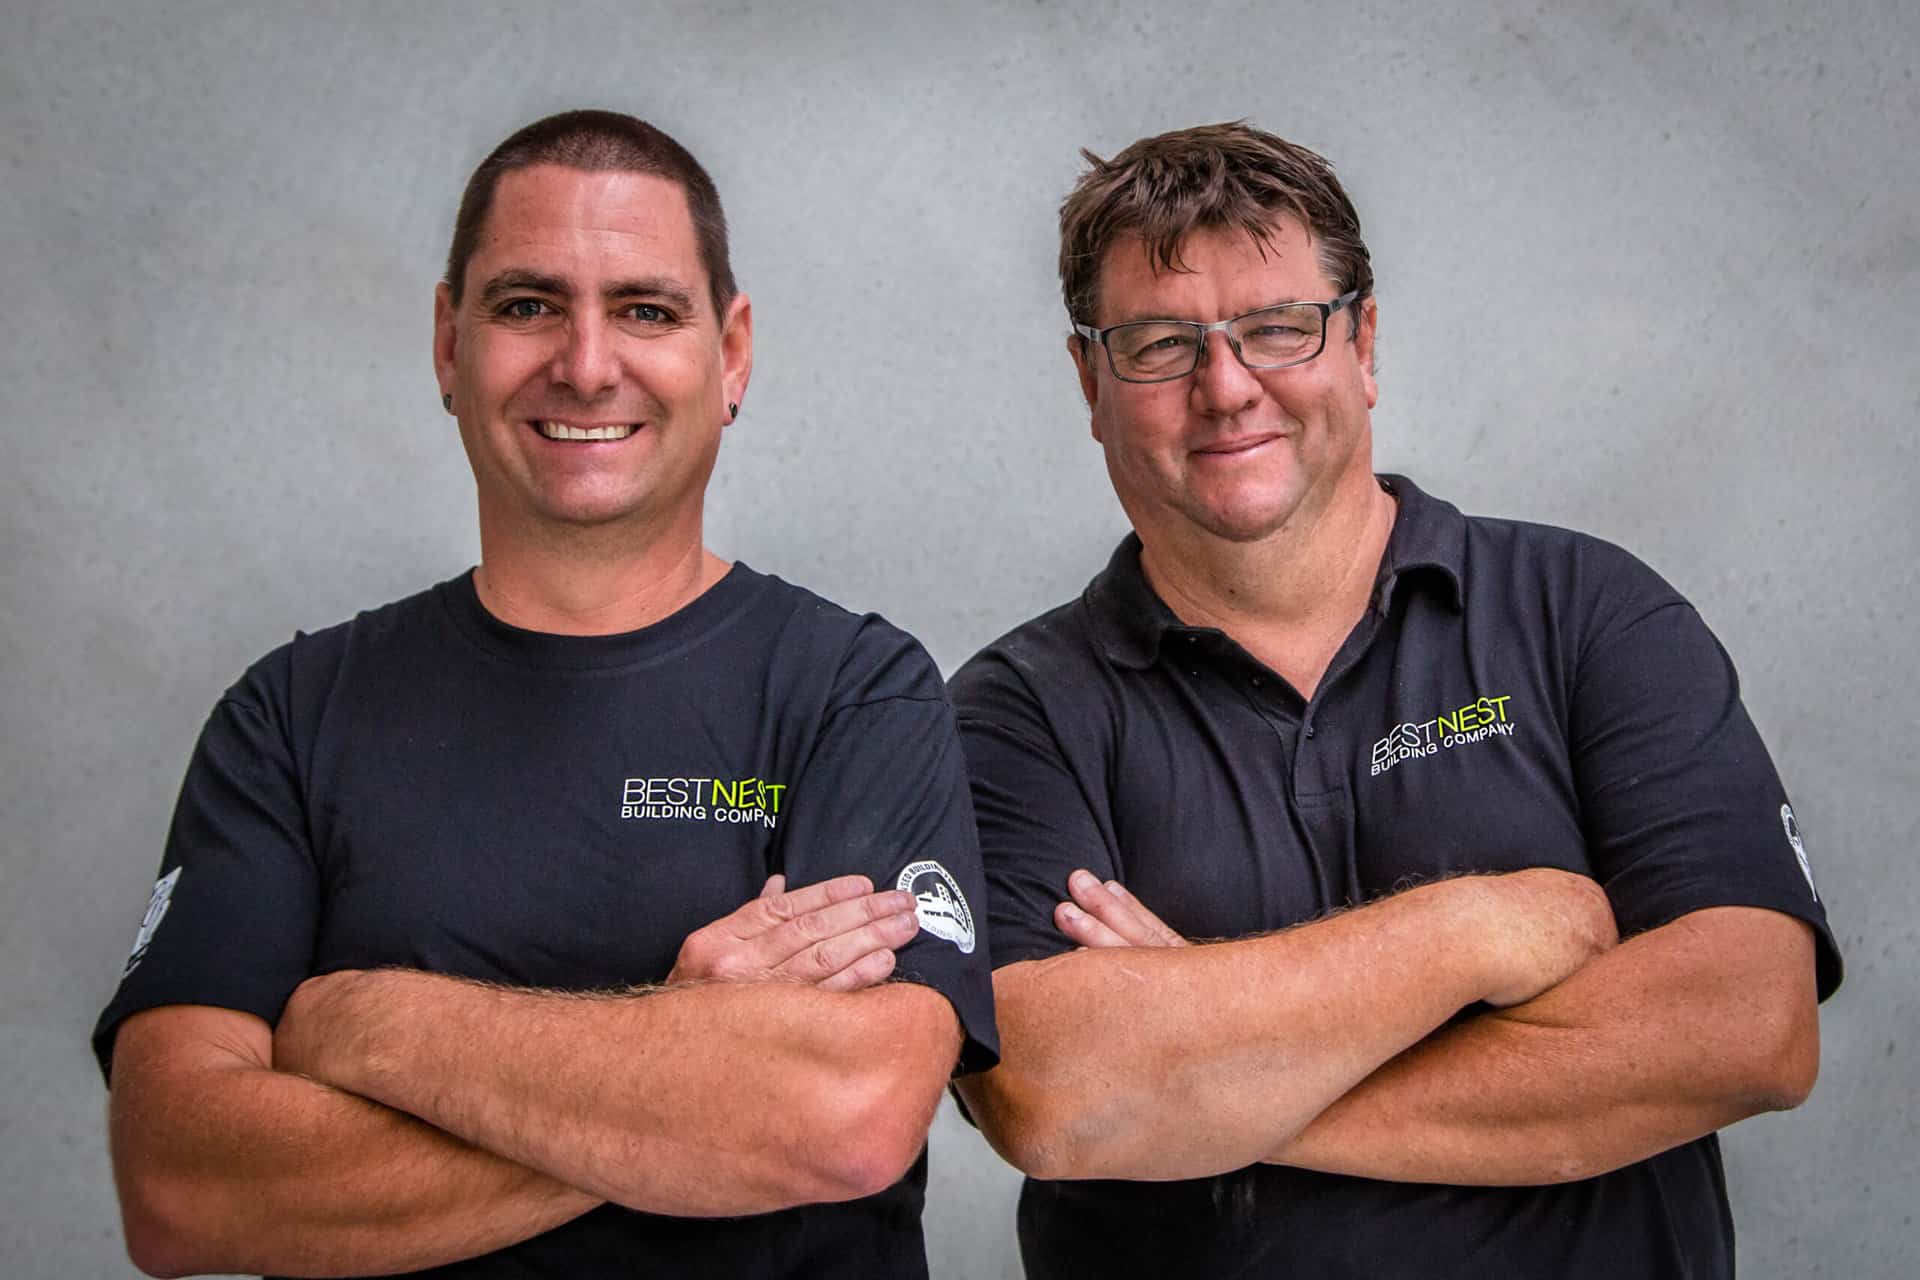 About, Best Nest Building Co | Professional Auckland Builders